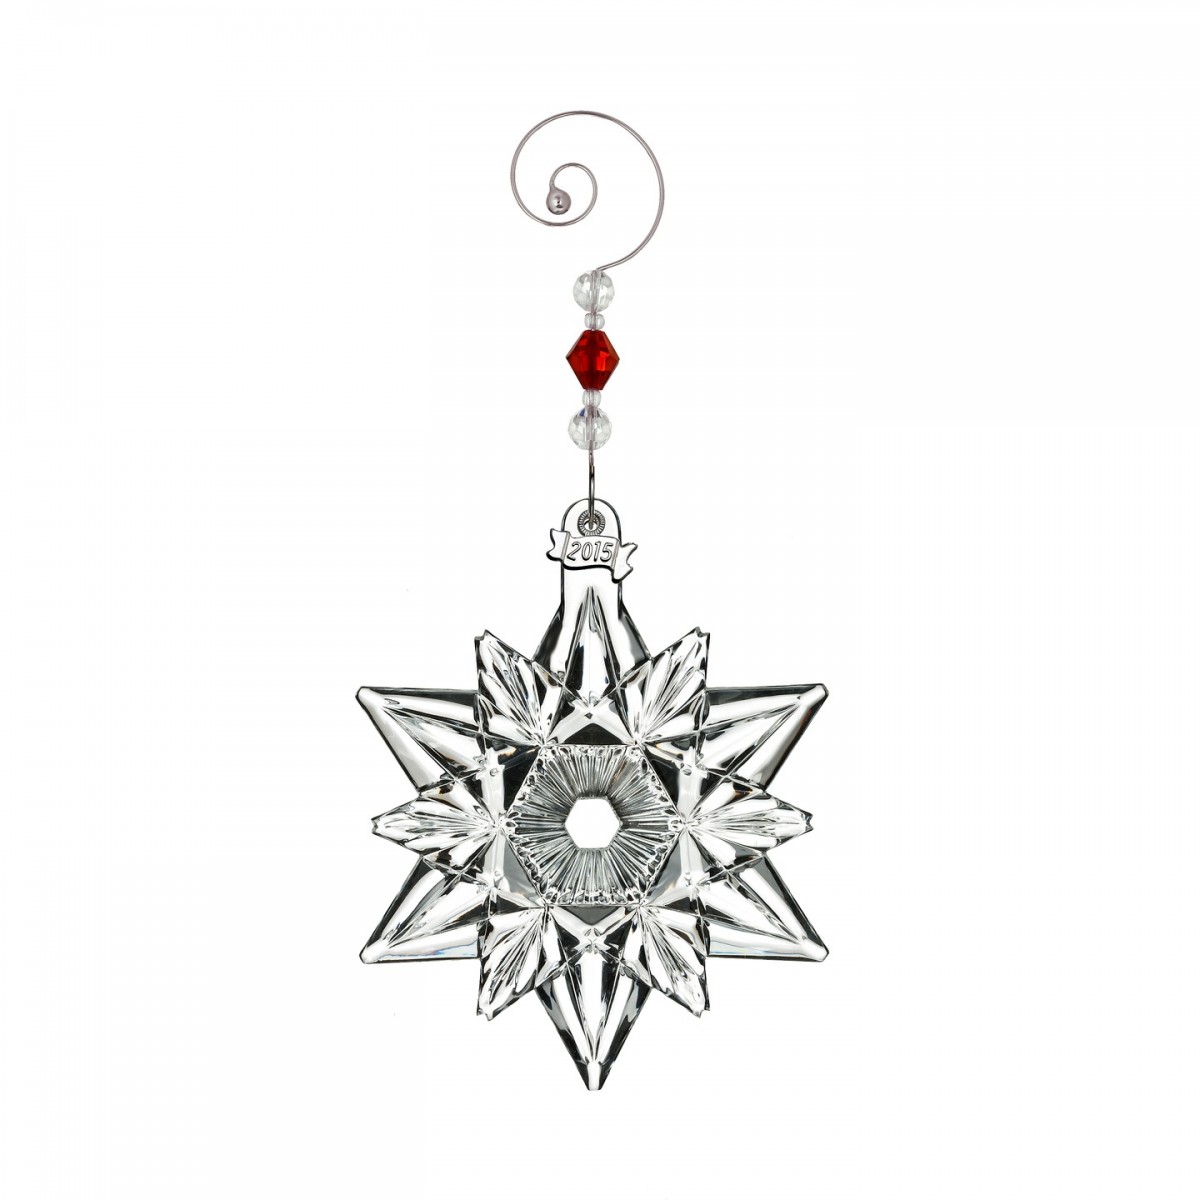 waterford-2015-annual-snow-crystal-pierced-ornament-701587164948.jpg